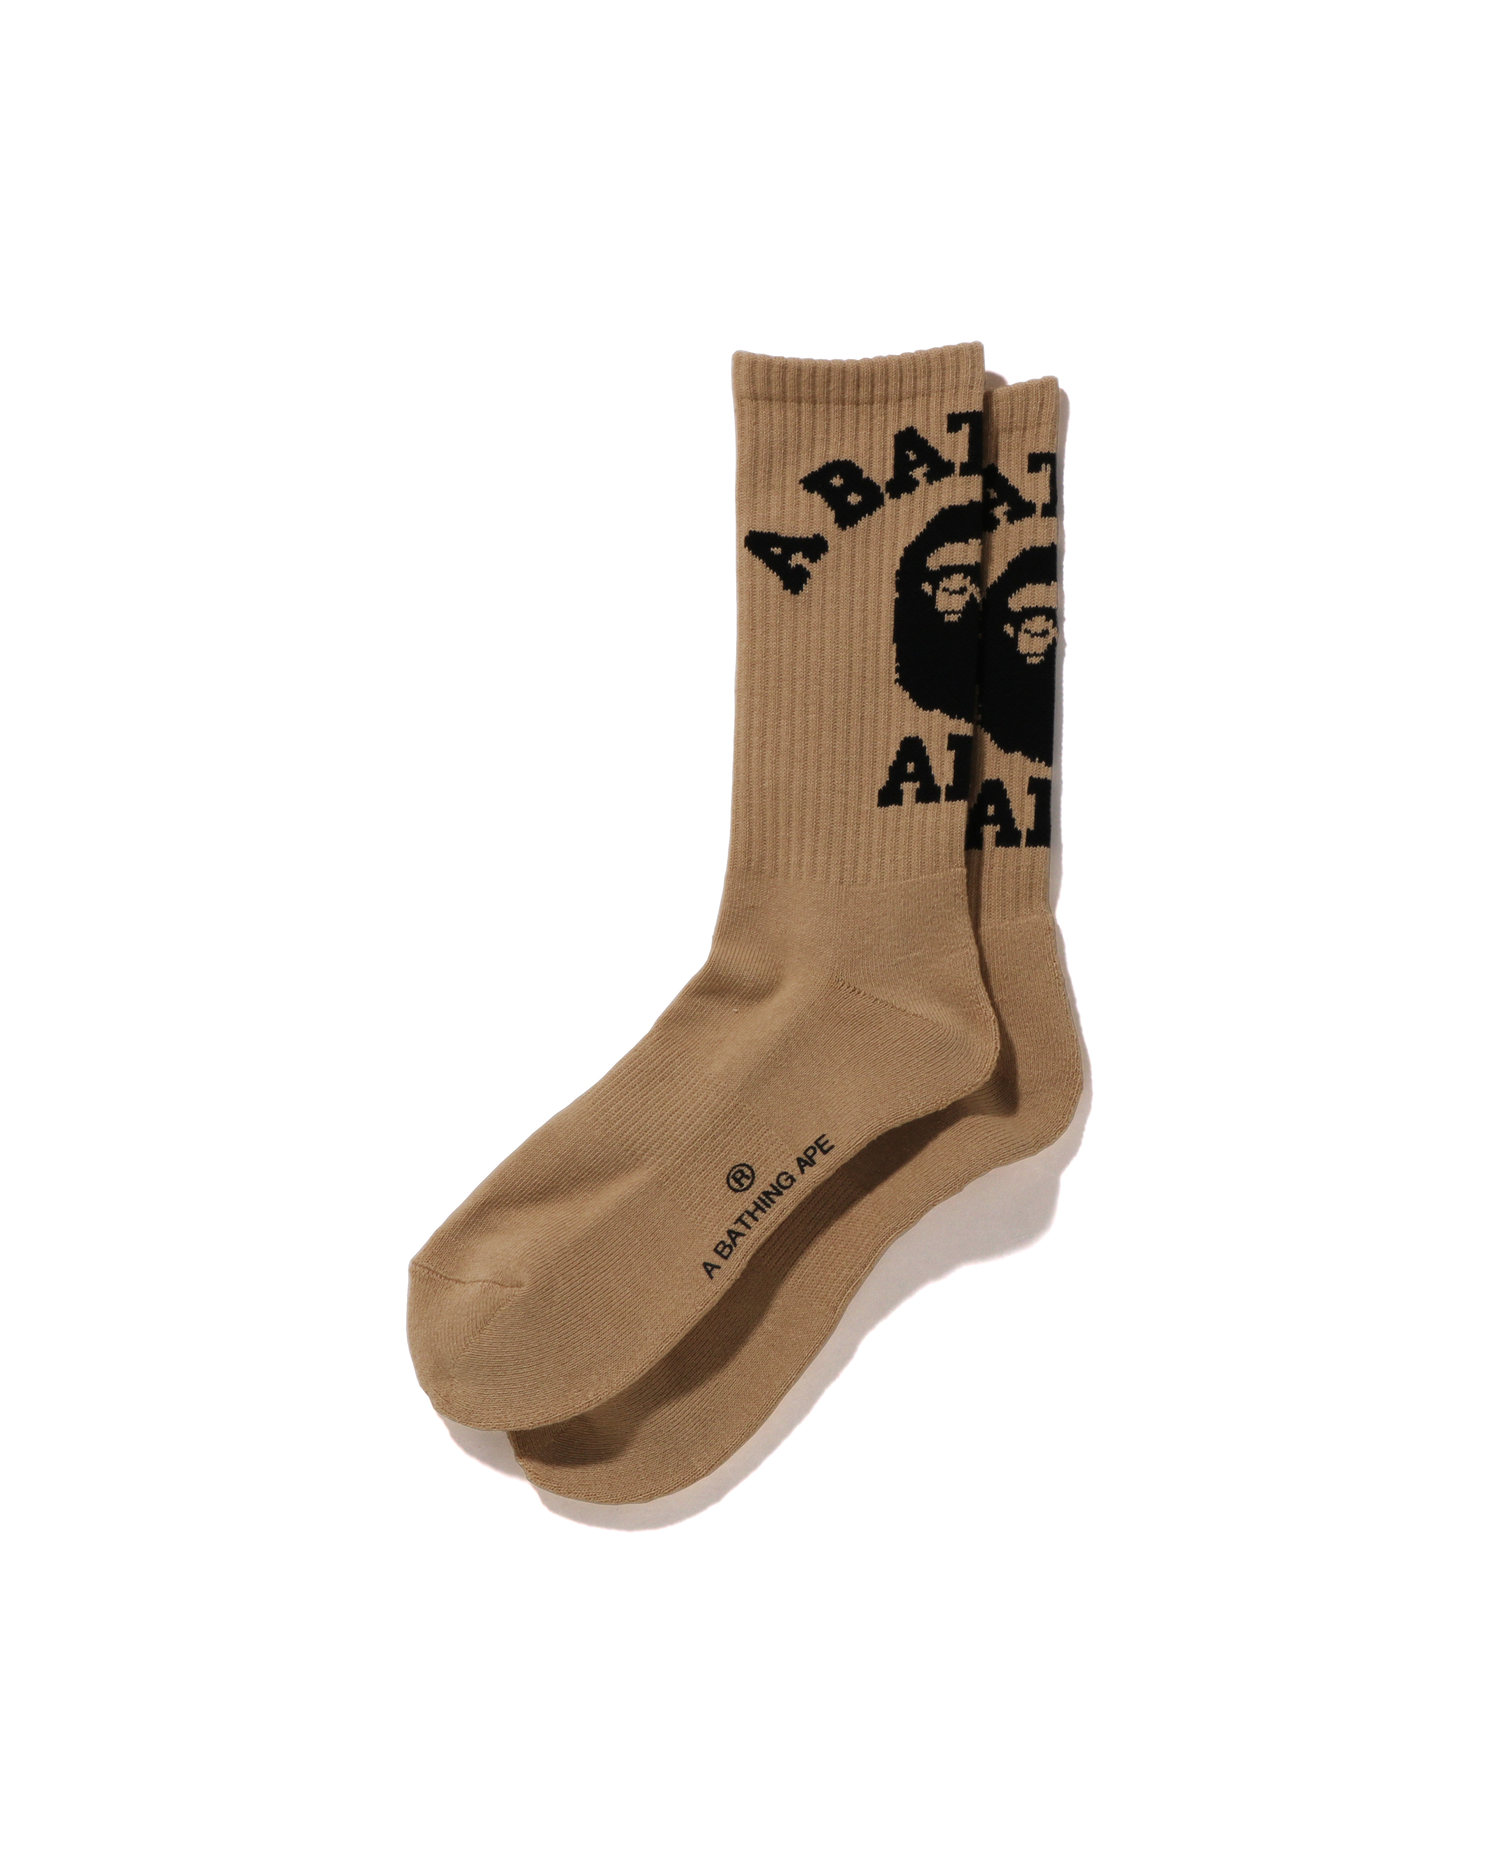 Shop BAPE College Socks Online | BAPE